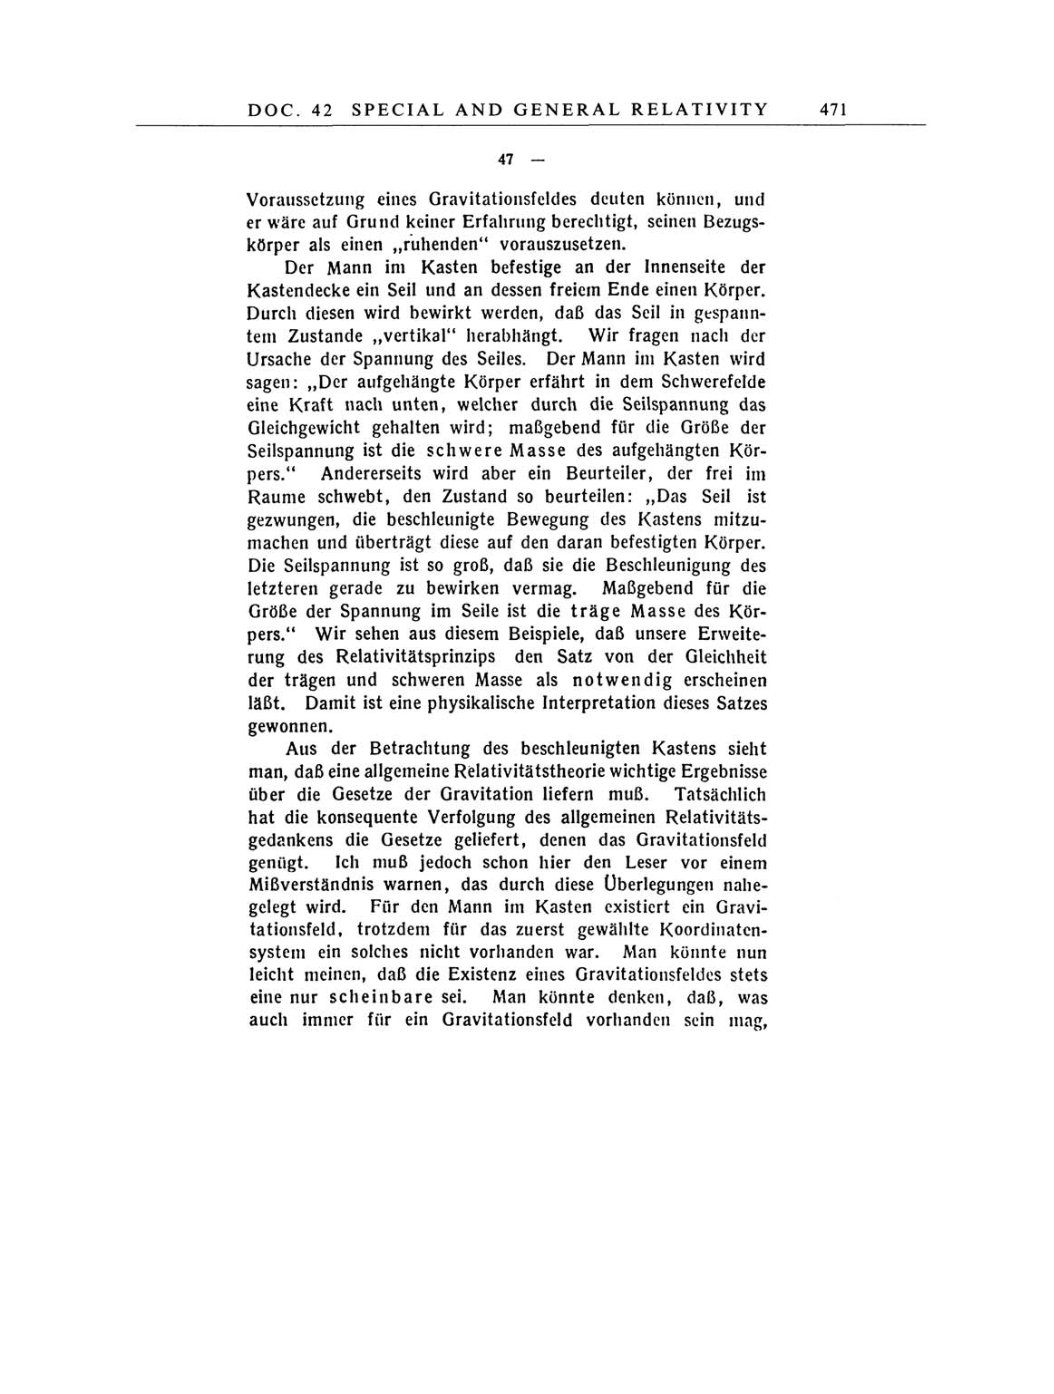 Volume 6: The Berlin Years: Writings, 1914-1917 page 471